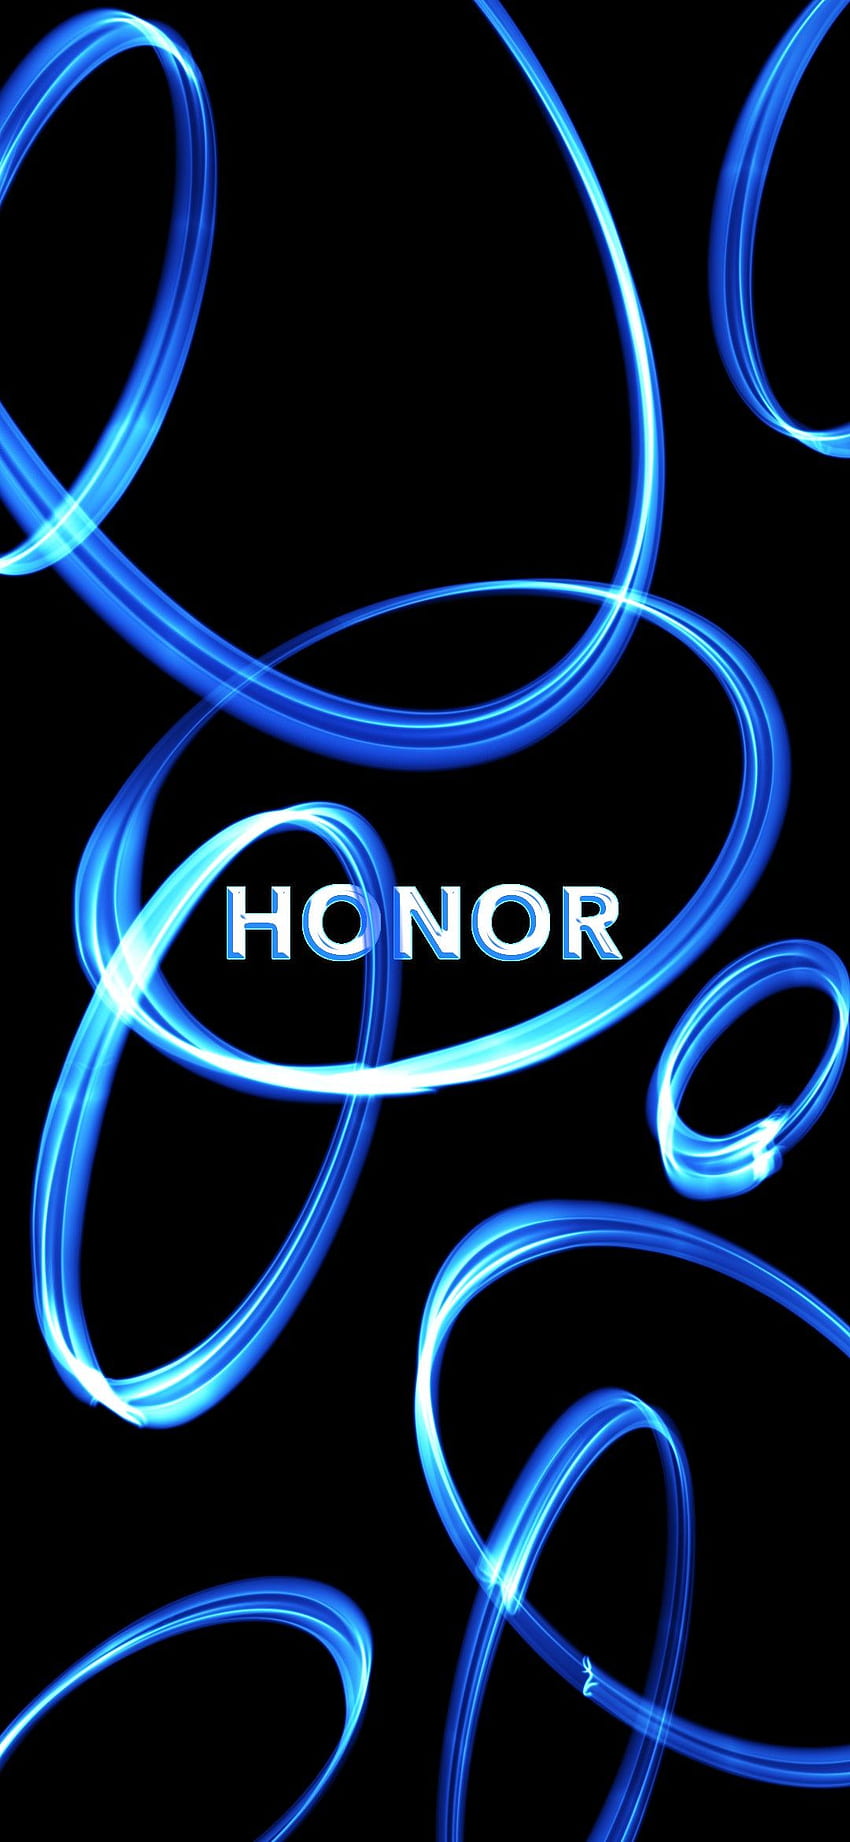 ArtStation - For Honor phone backgrounds - Season 2&3 Heroes